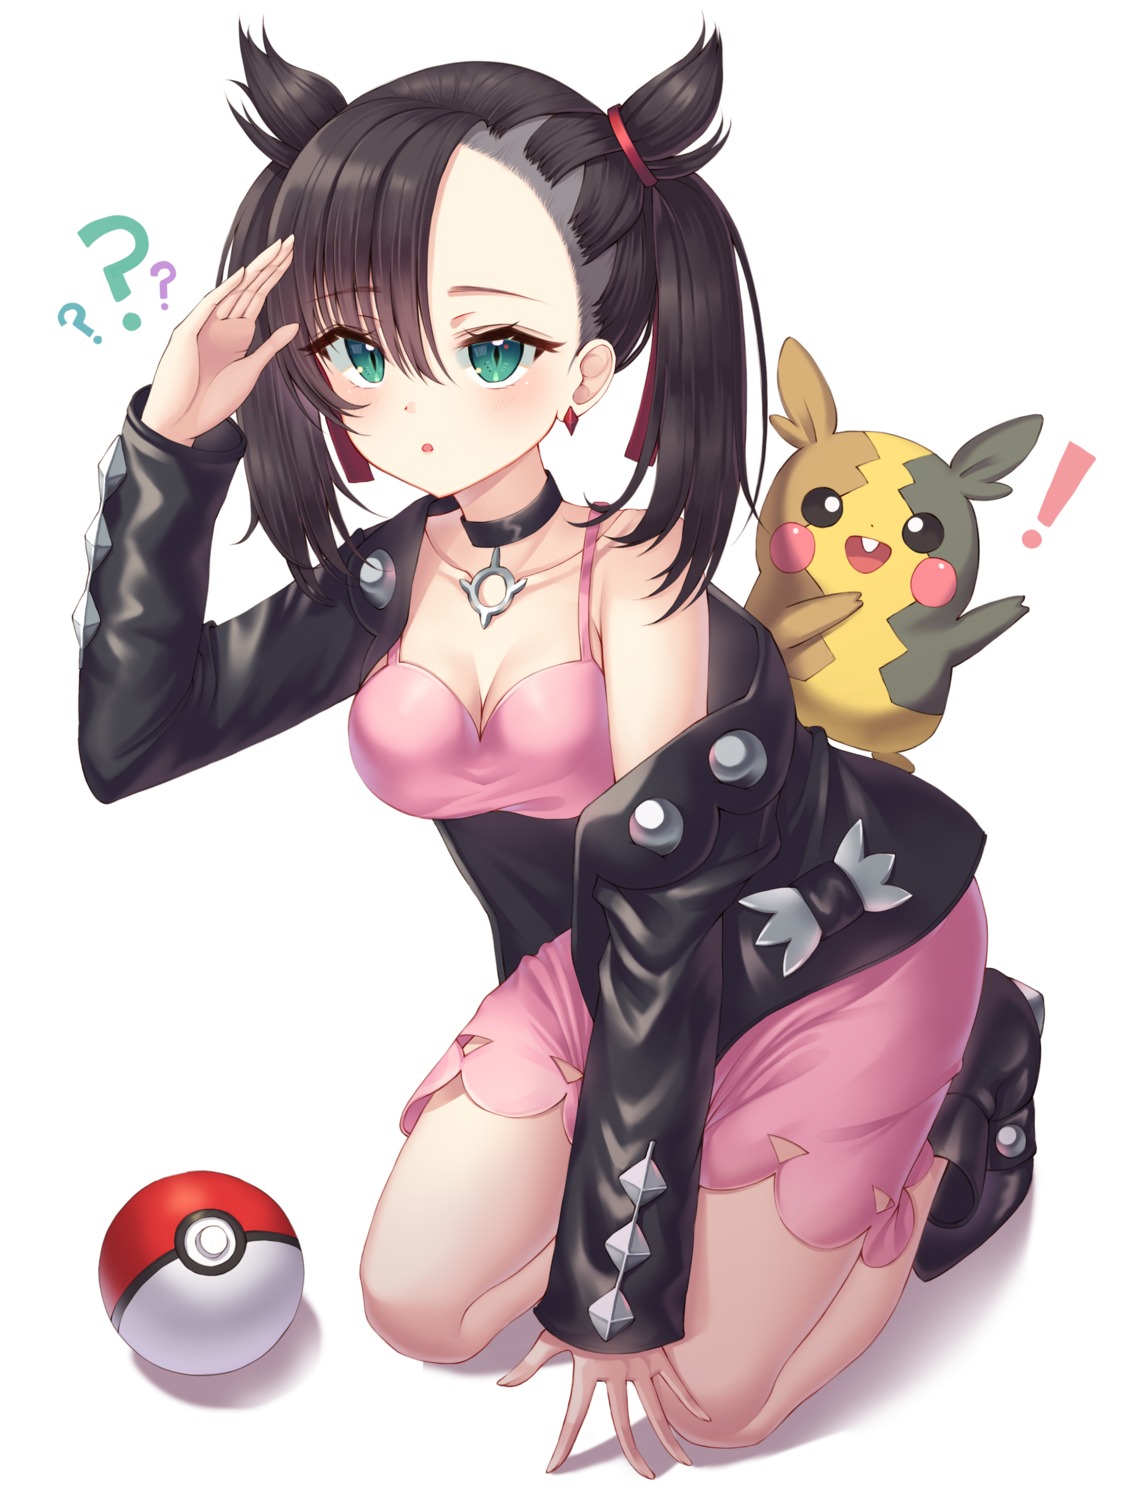 cleavage dress heels mary_(pokemon) morpeko now_(nowsicaa_) pokemon pokemon_sword_and_shield